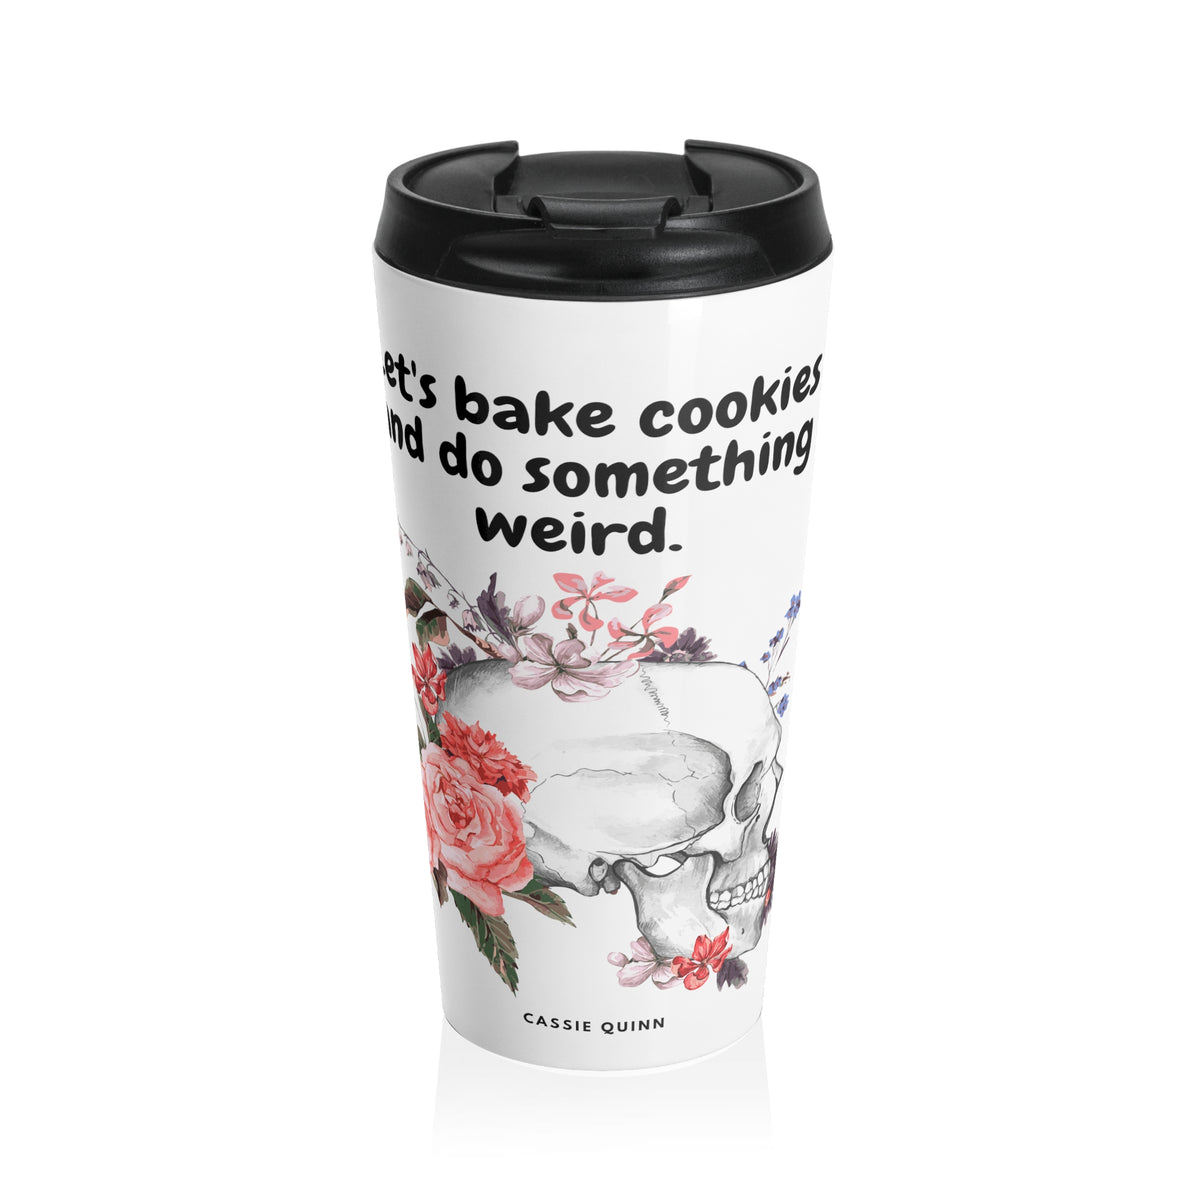 Cassie Baking Cookies Stainless Steel Travel Mug